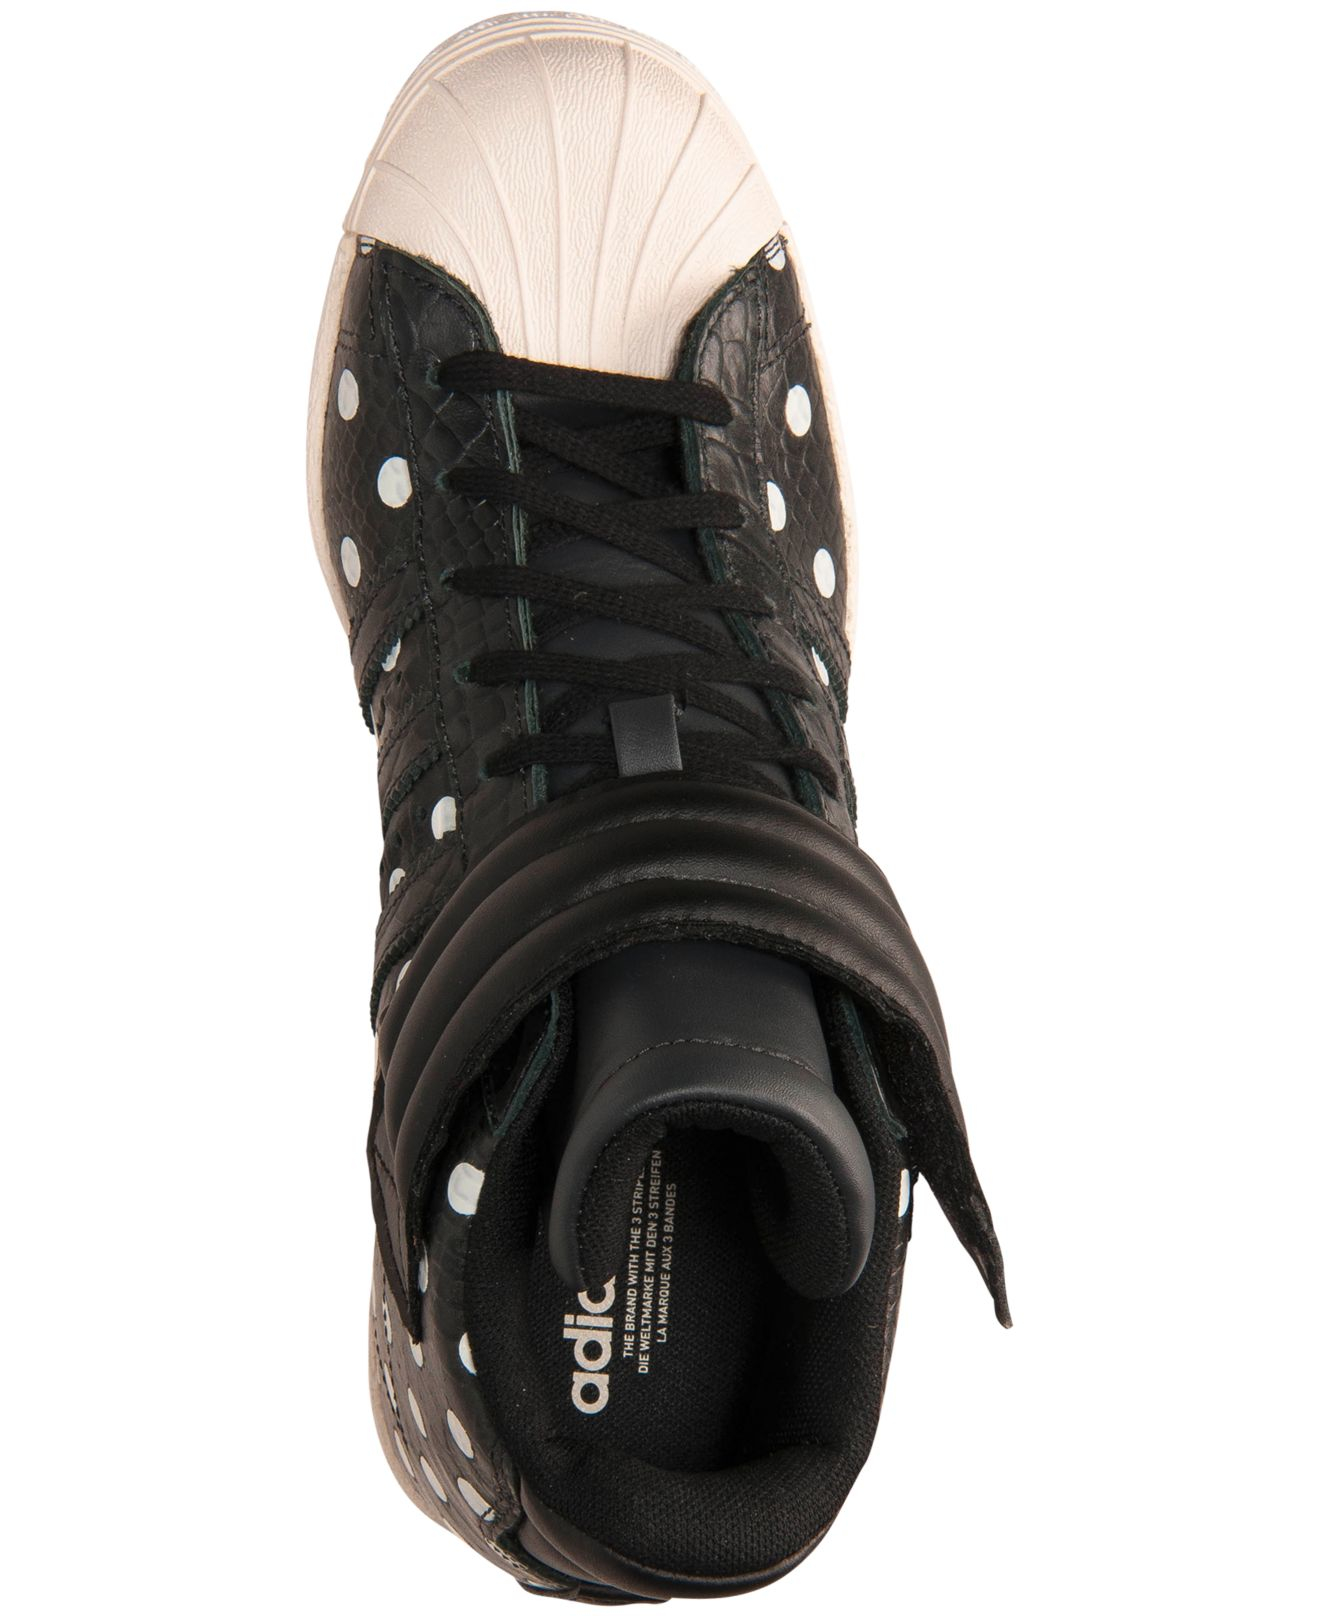 adidas Originals Women's Superstar Up Strap W Shoes, Black/Black 